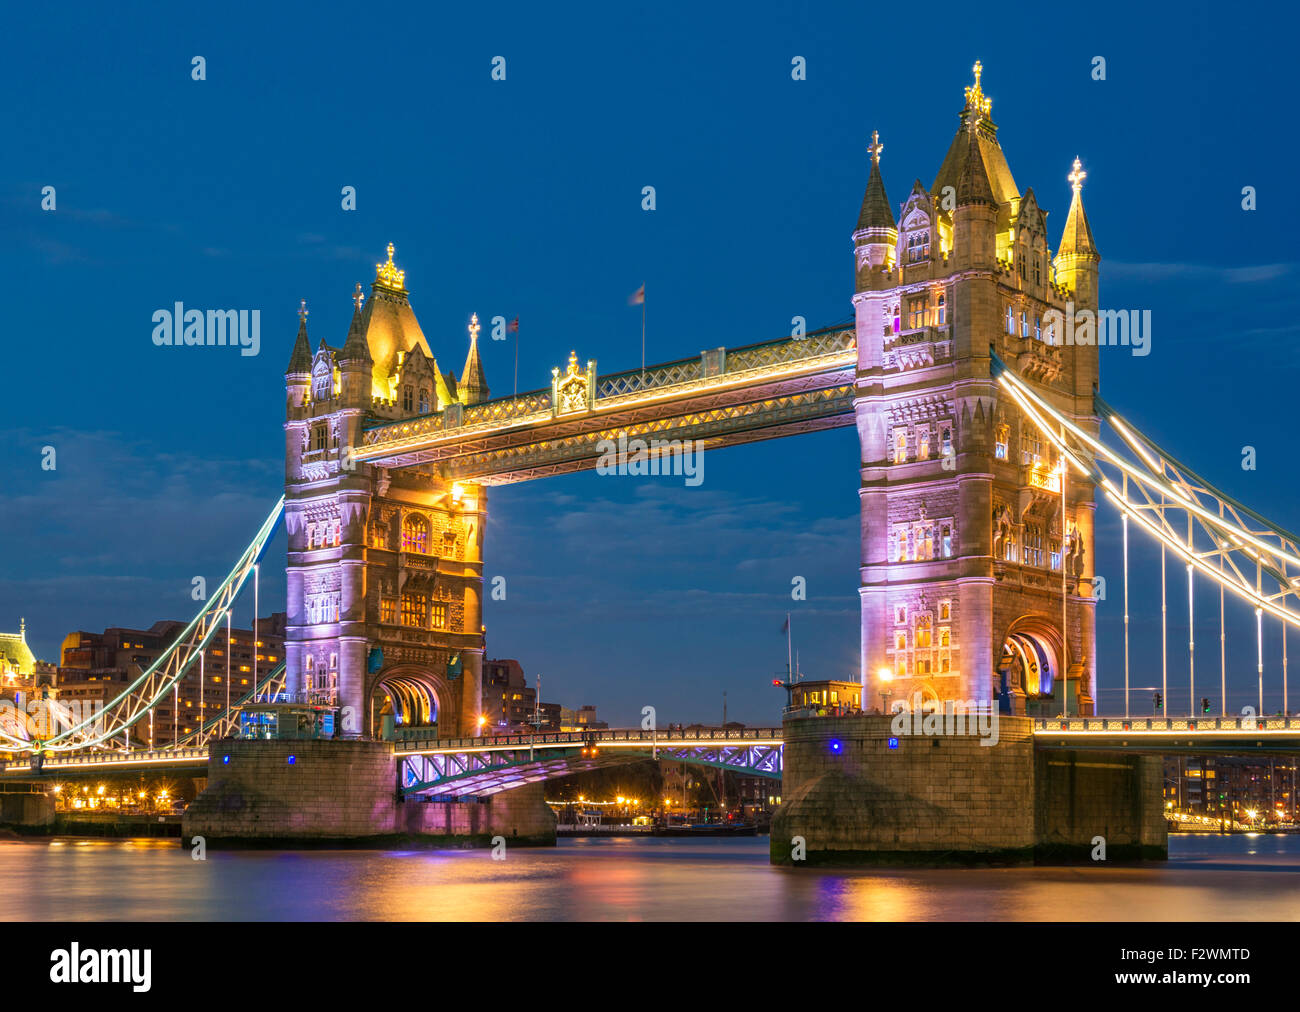 Illuminated lit up Tower Bridge at night and River Thames City of London England GB UK EU Europe Stock Photo